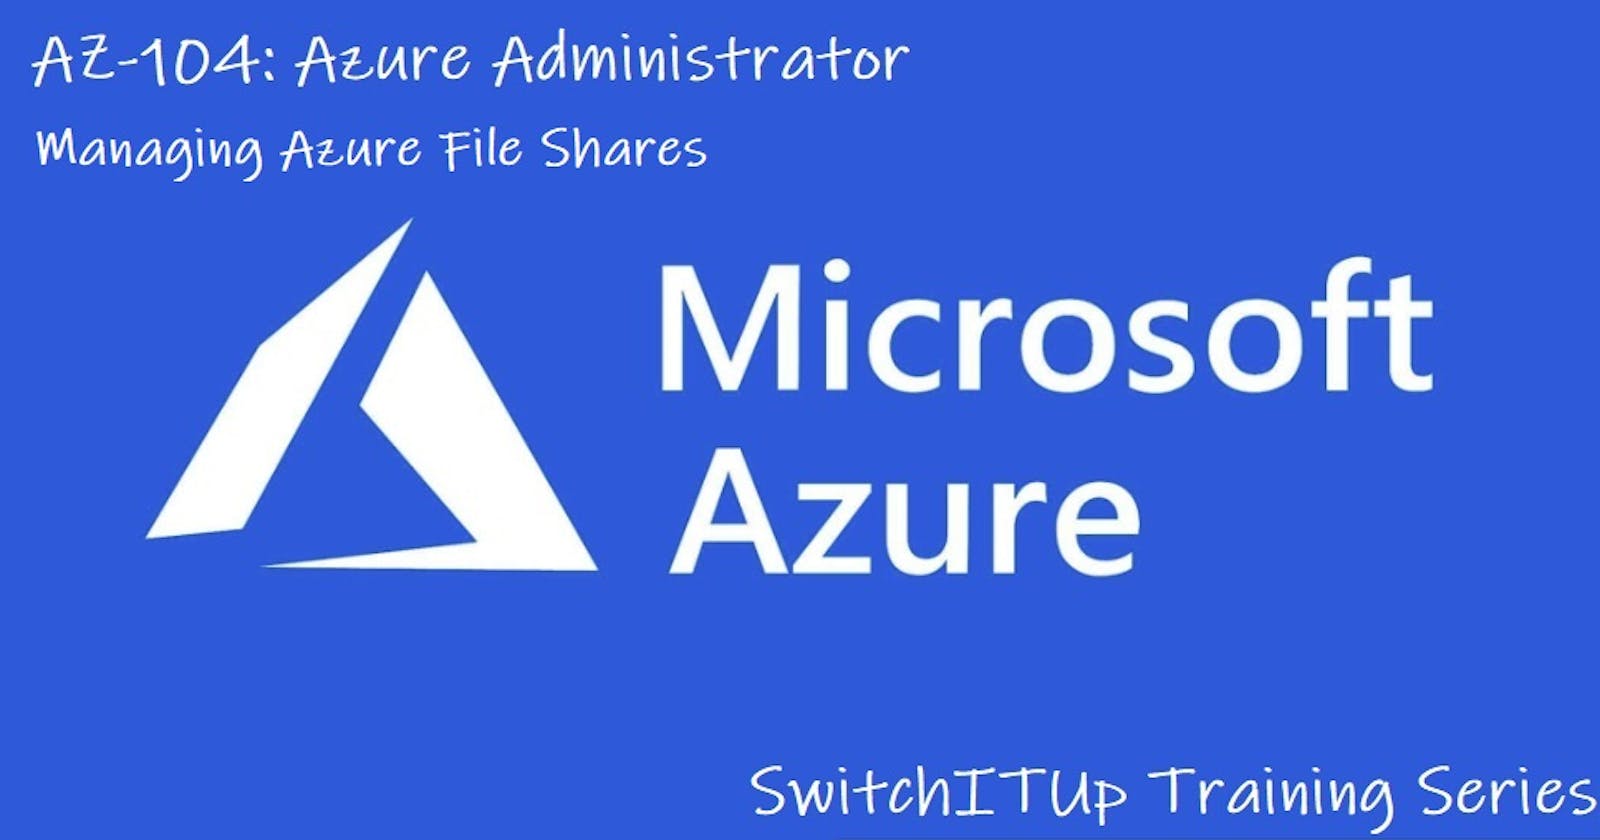 Managing Azure File Shares